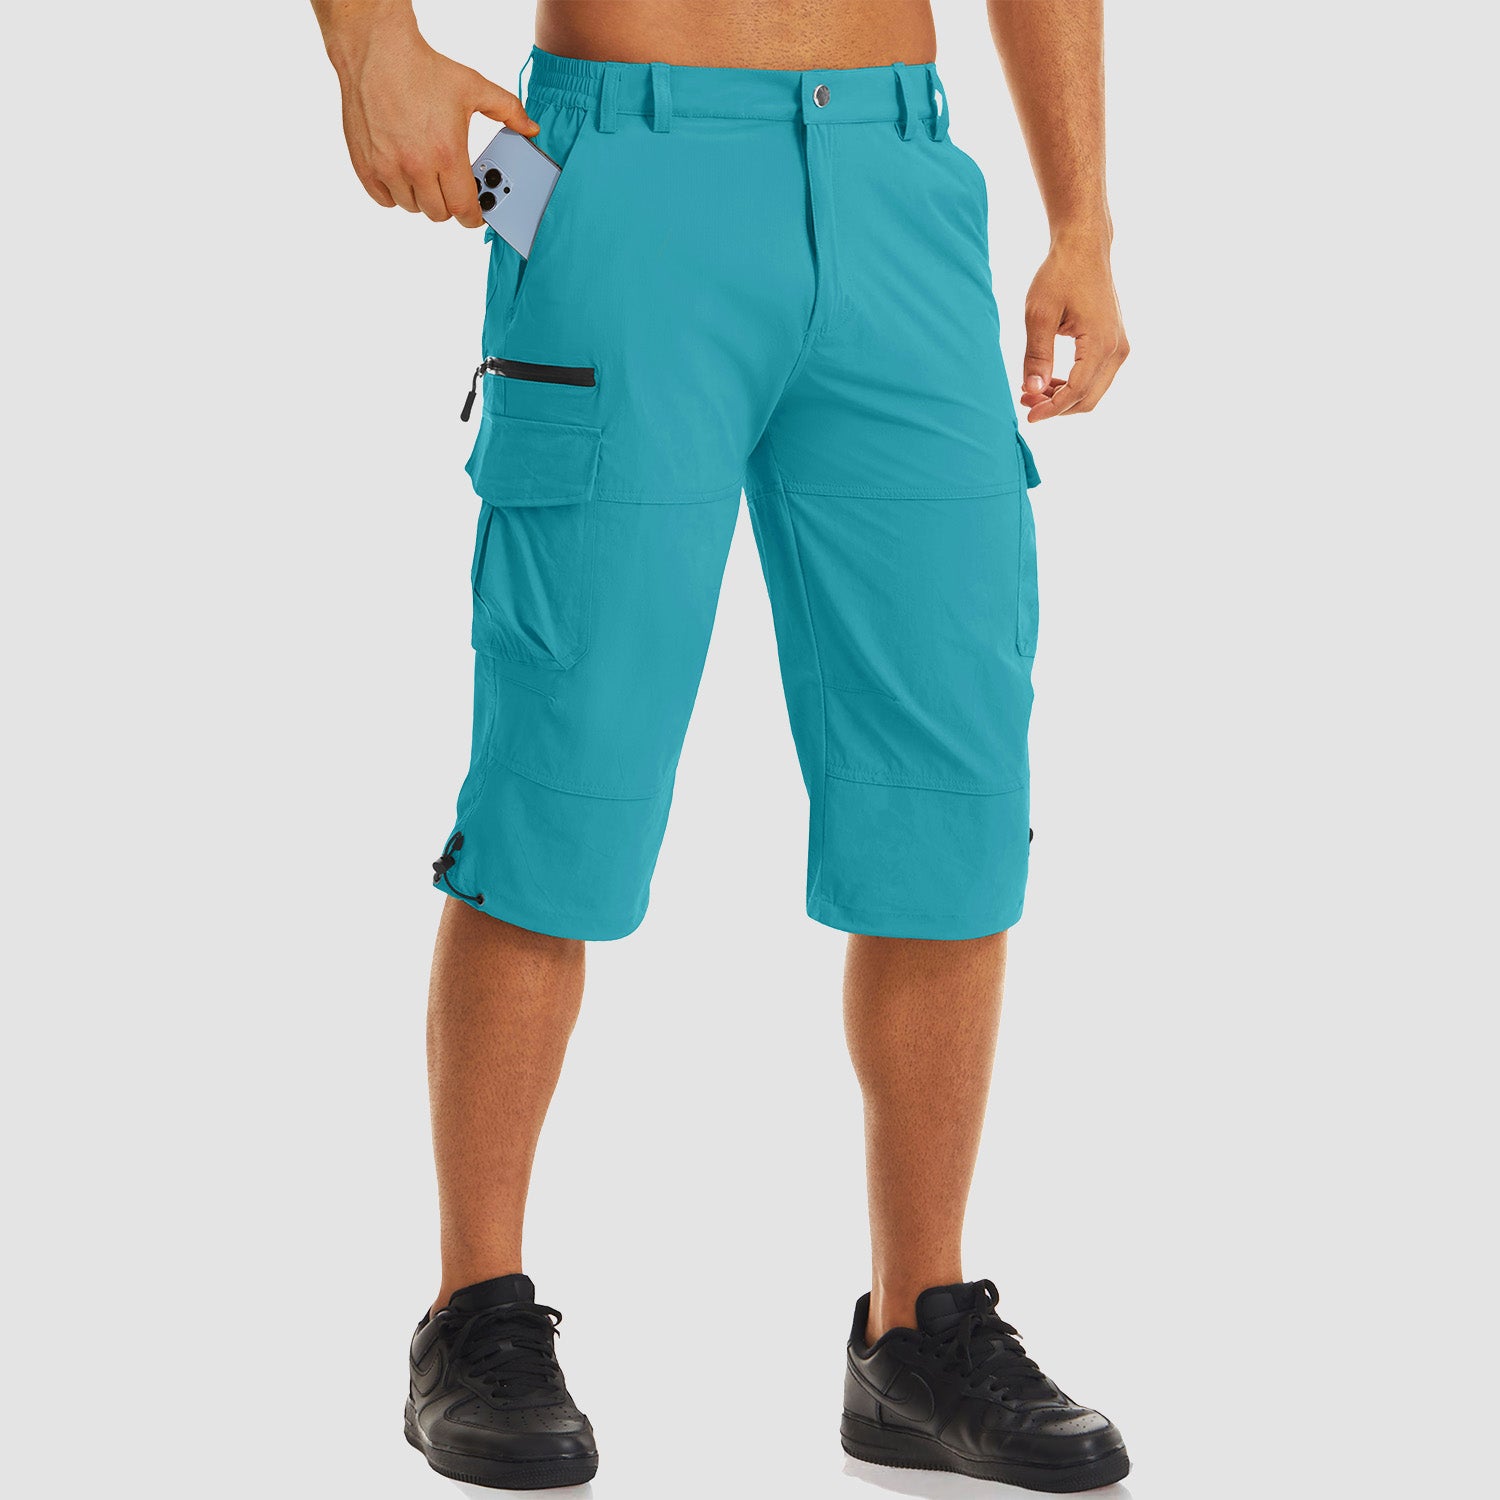 Men's 3/4 Capri Quick Dry Sports Shorts